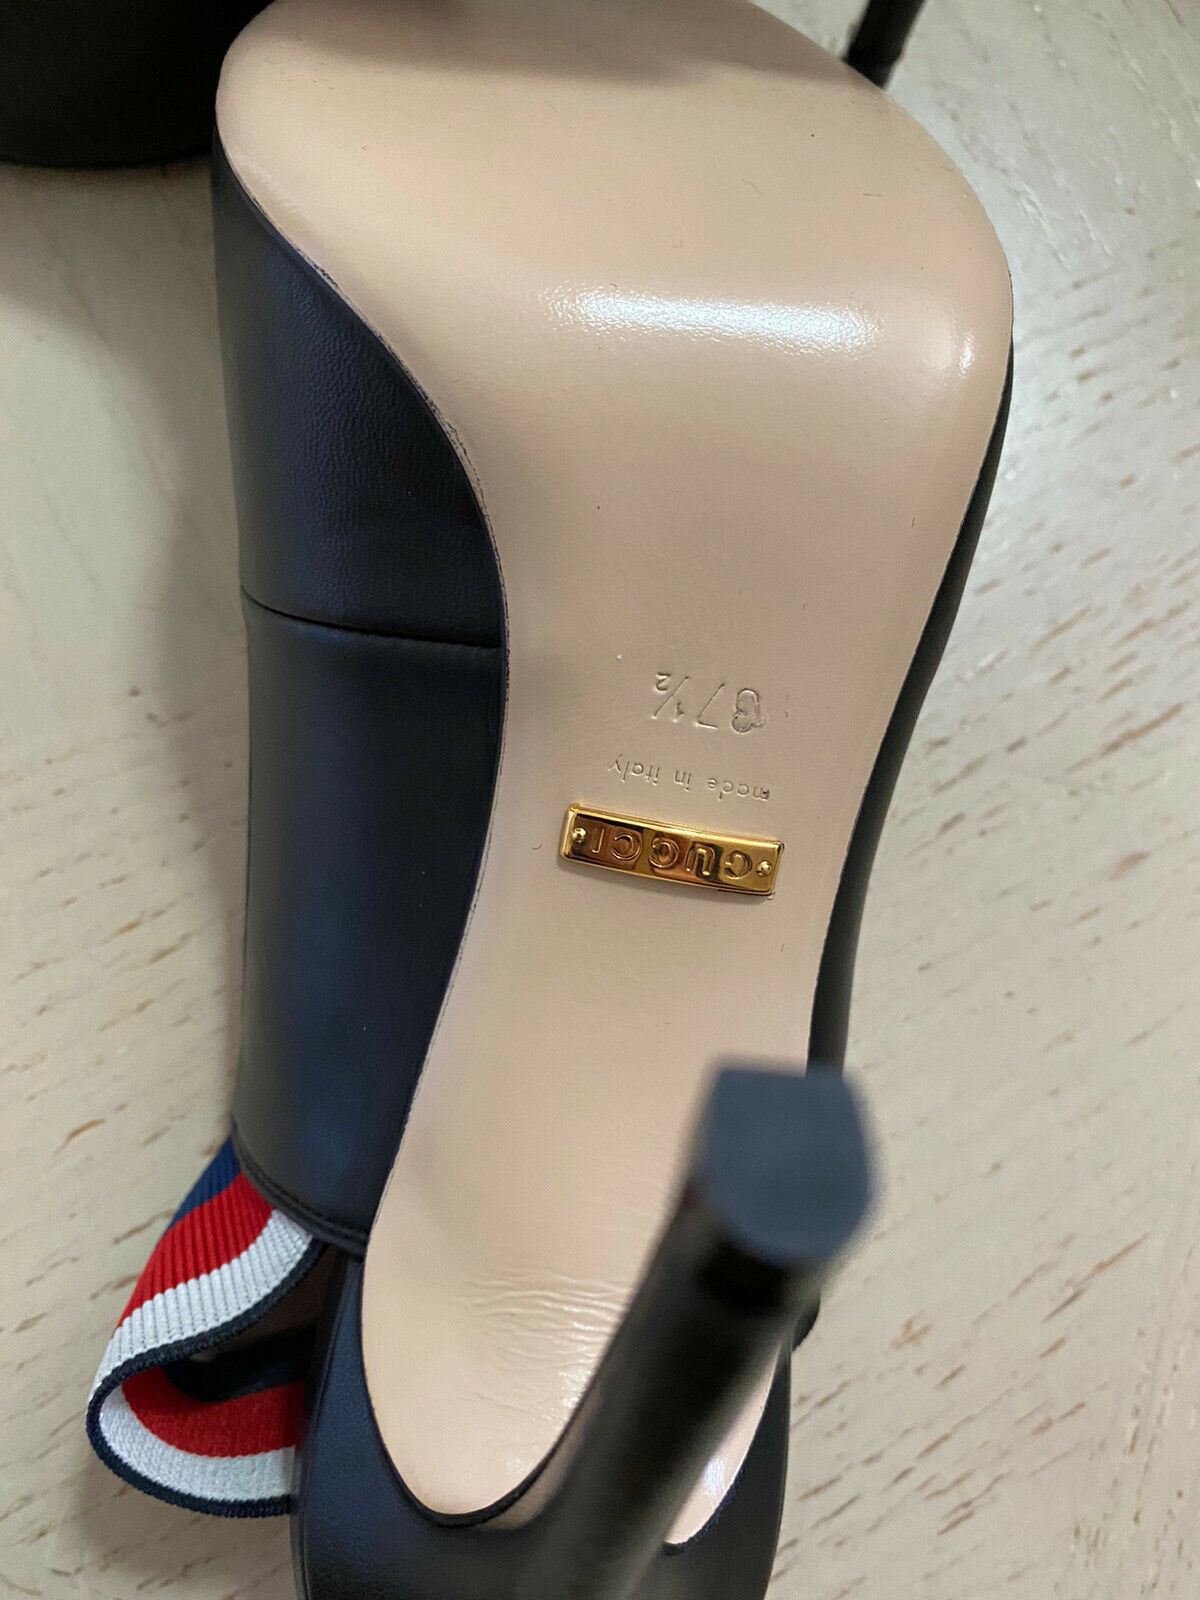 NIB  Gucci Women’s Sandal Shoes Black 7.5 US ( 37.5 Eu ) 524645 Italy